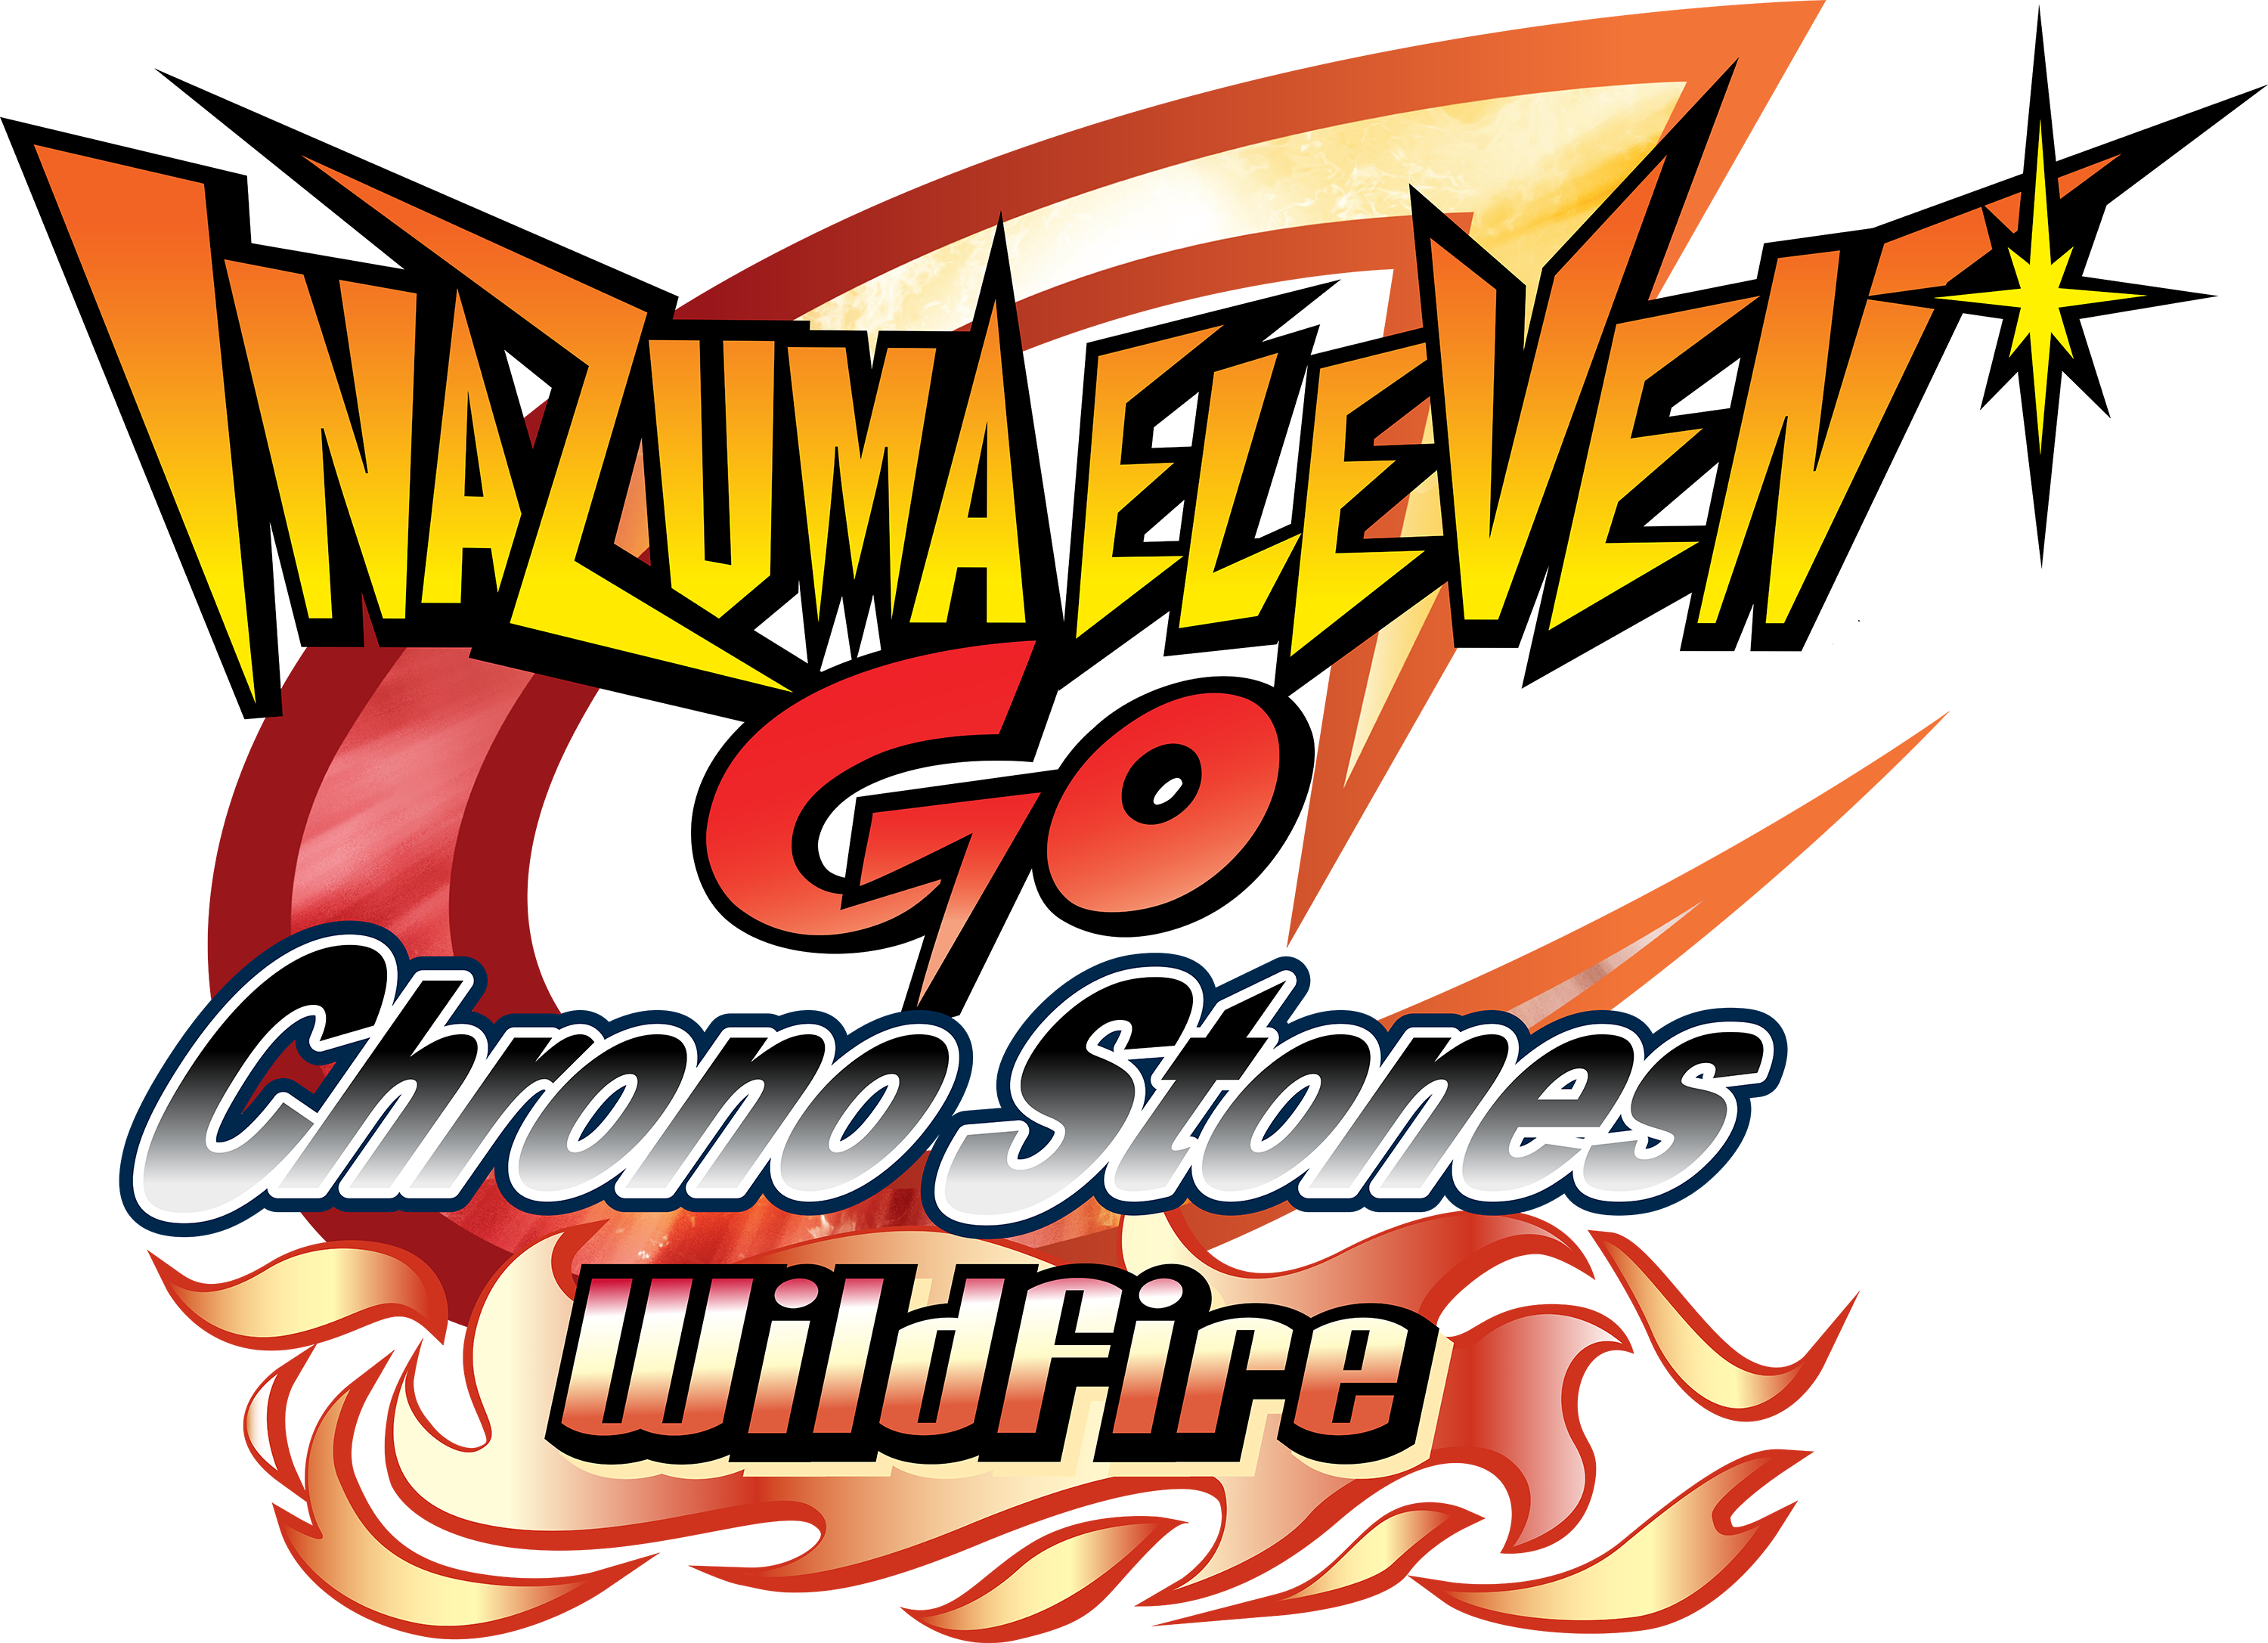 Inazuma Eleven GO Chrono Stones: Wildfire